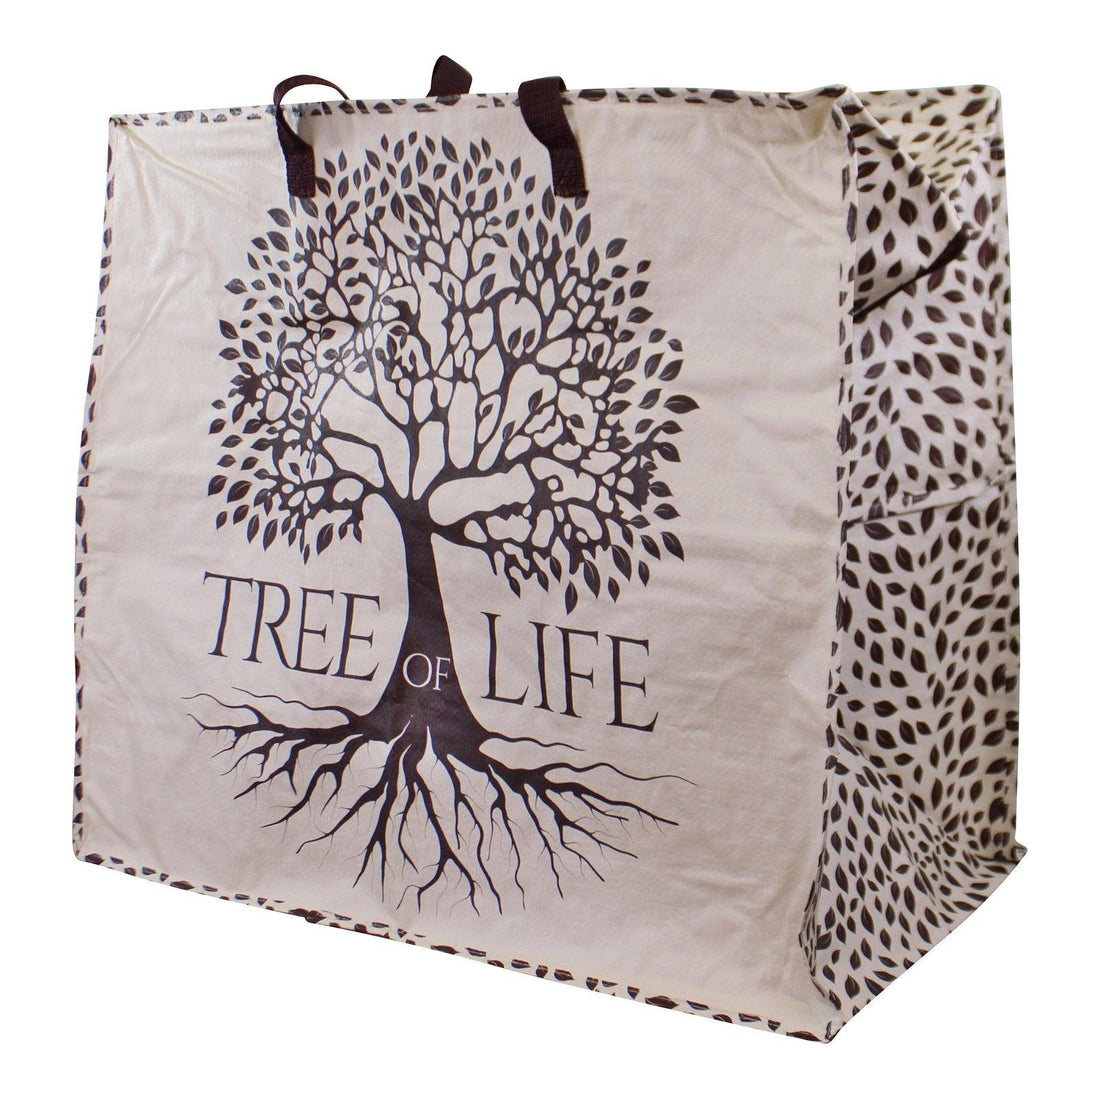 Extra Large Tree Of Life Shopper Bag, 65x55cm - £15.99 - Tree Of Life 